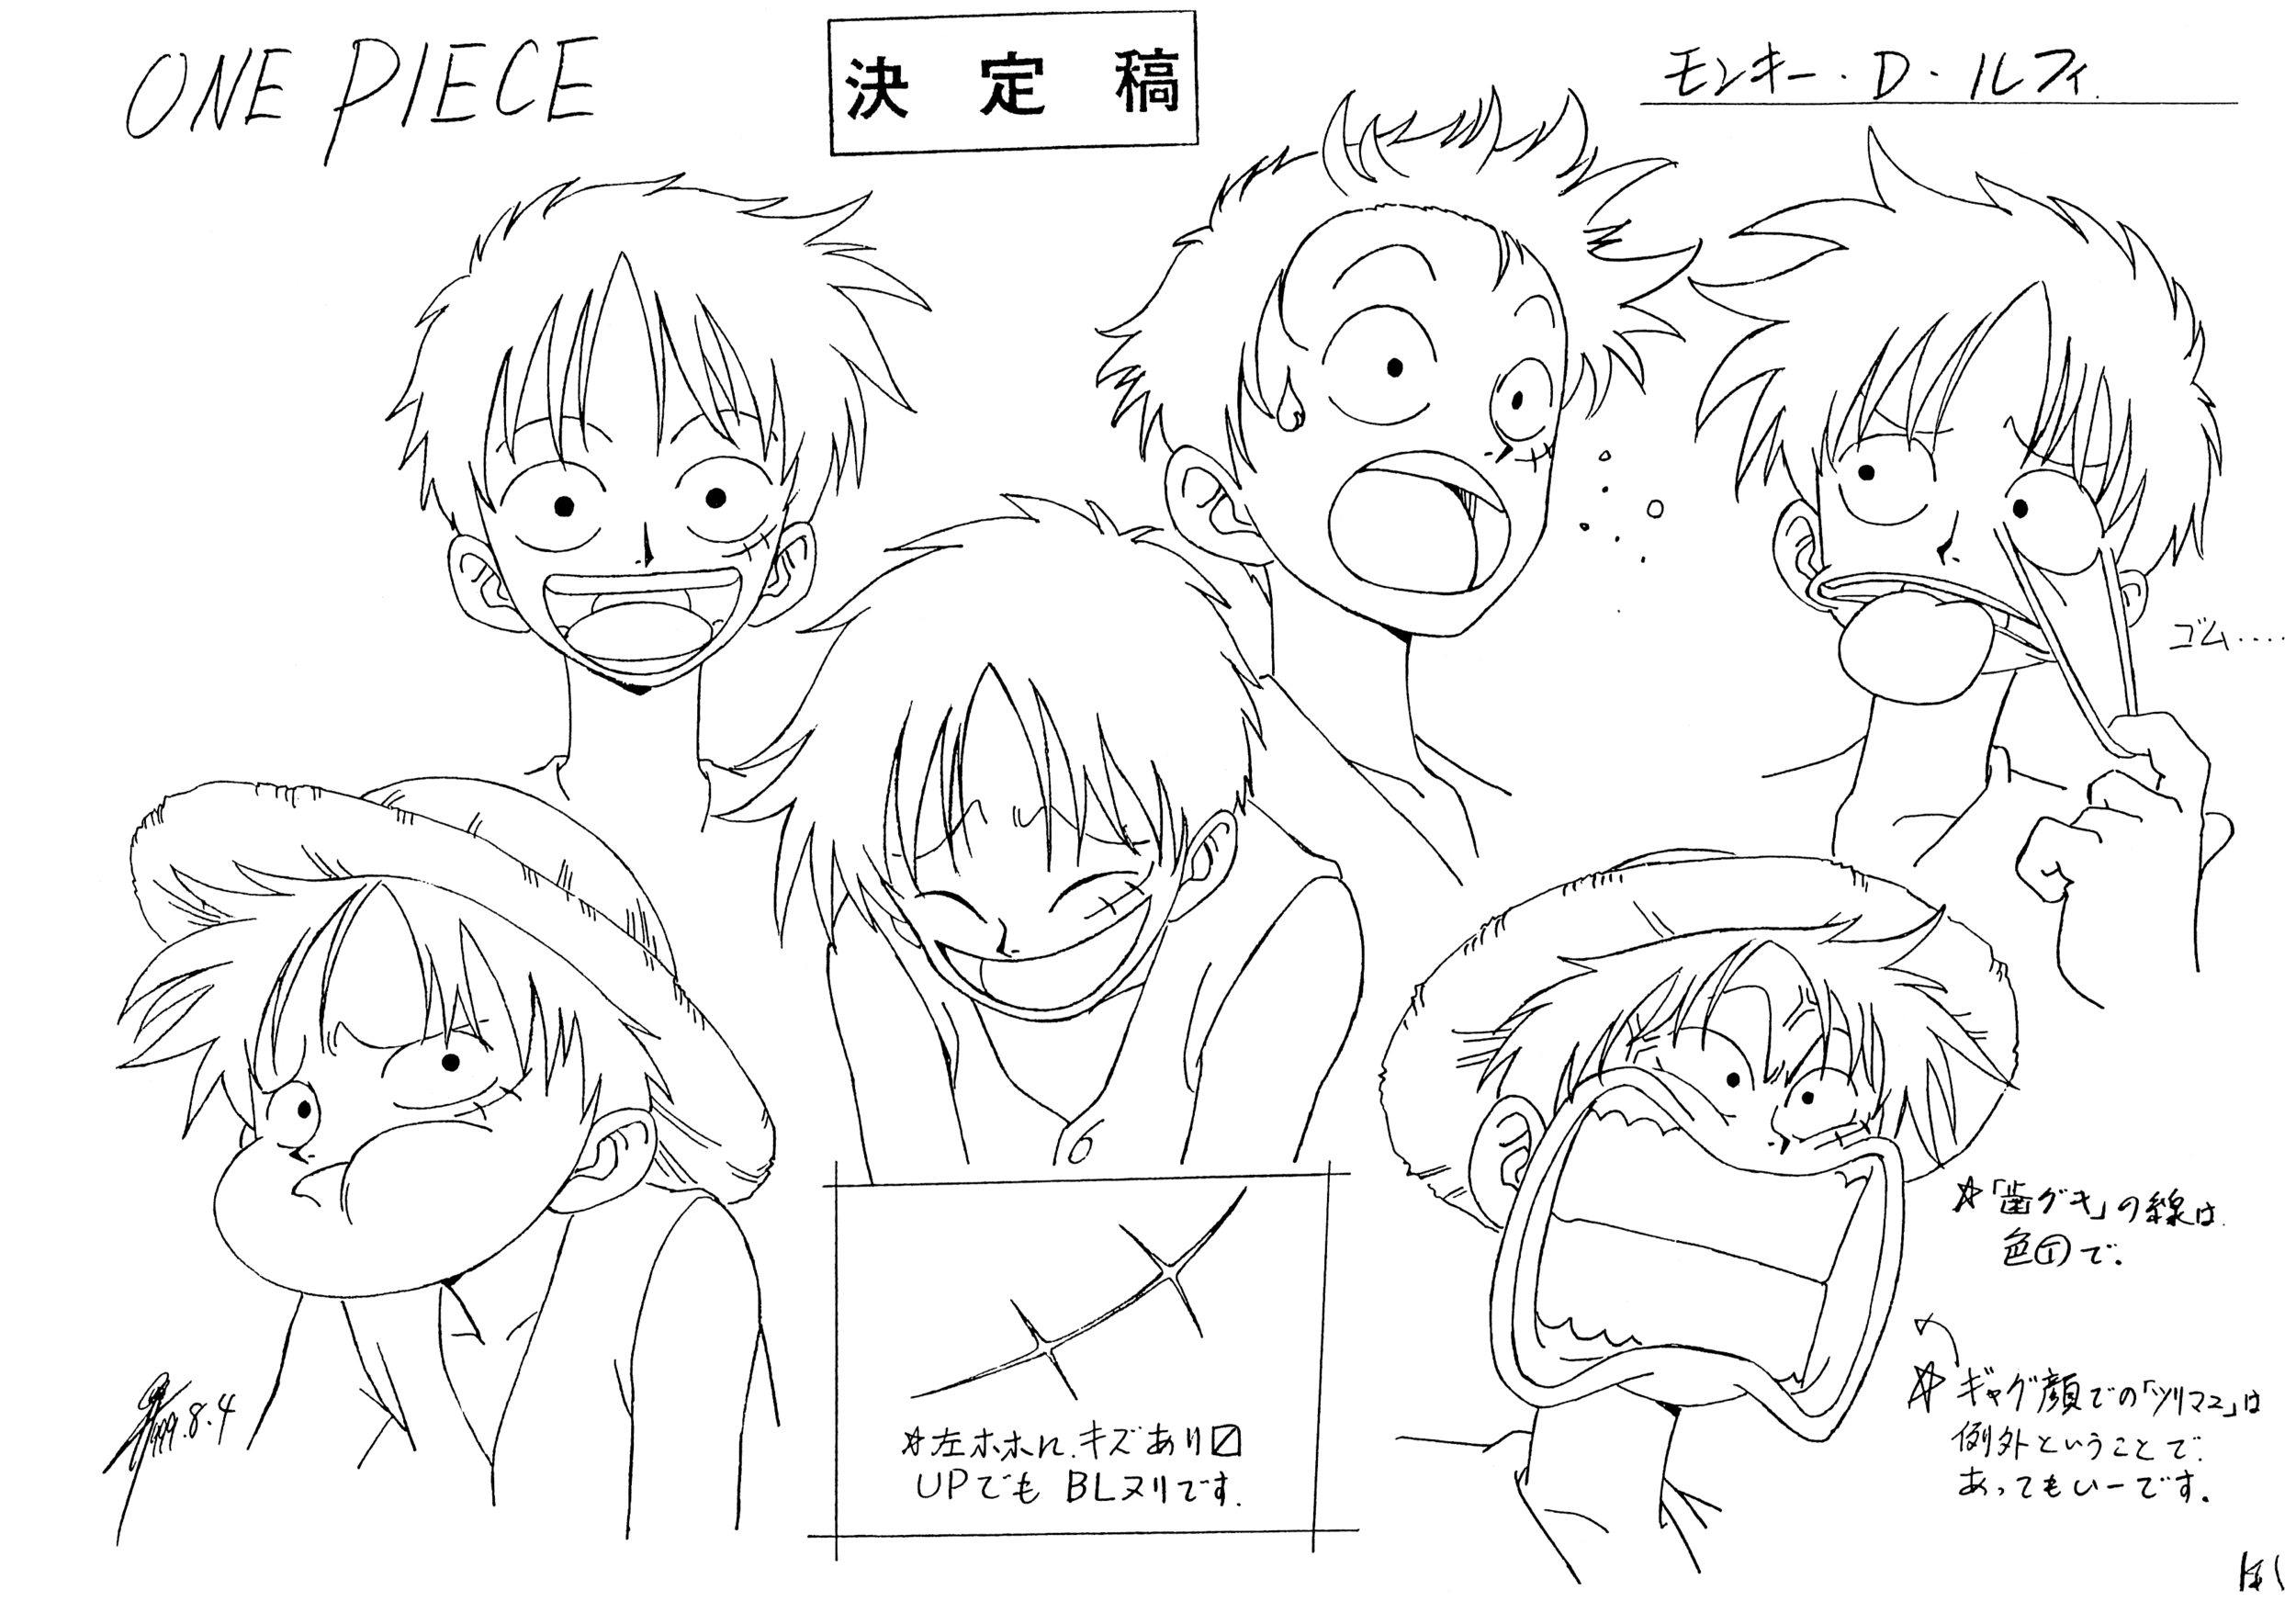 Art of One Piece